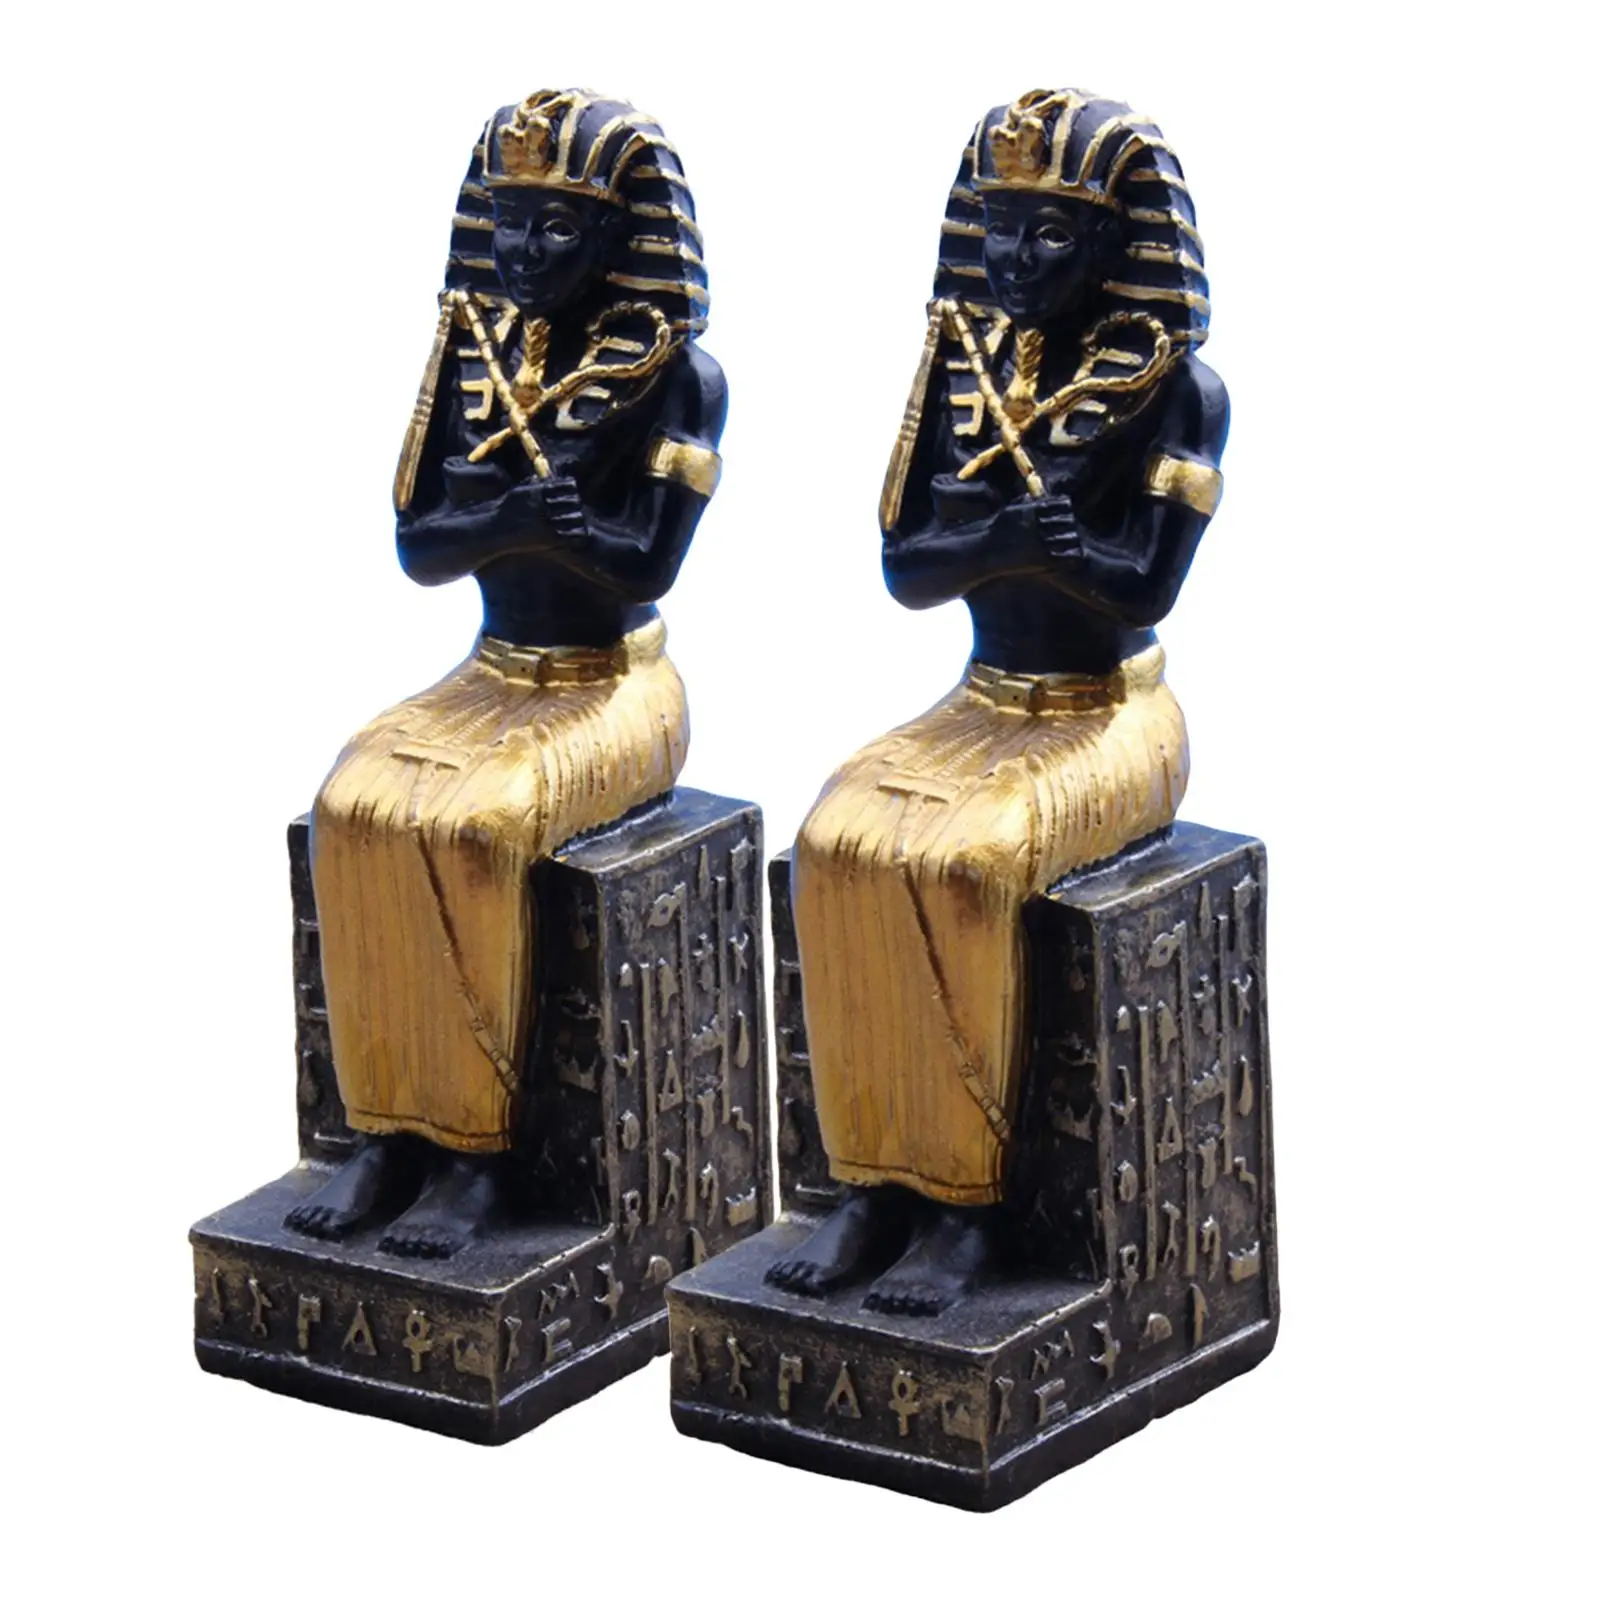 2x Egyptian Pharaoh Figurine Sculpture Art Crafts for Desktop Home Office Ornament